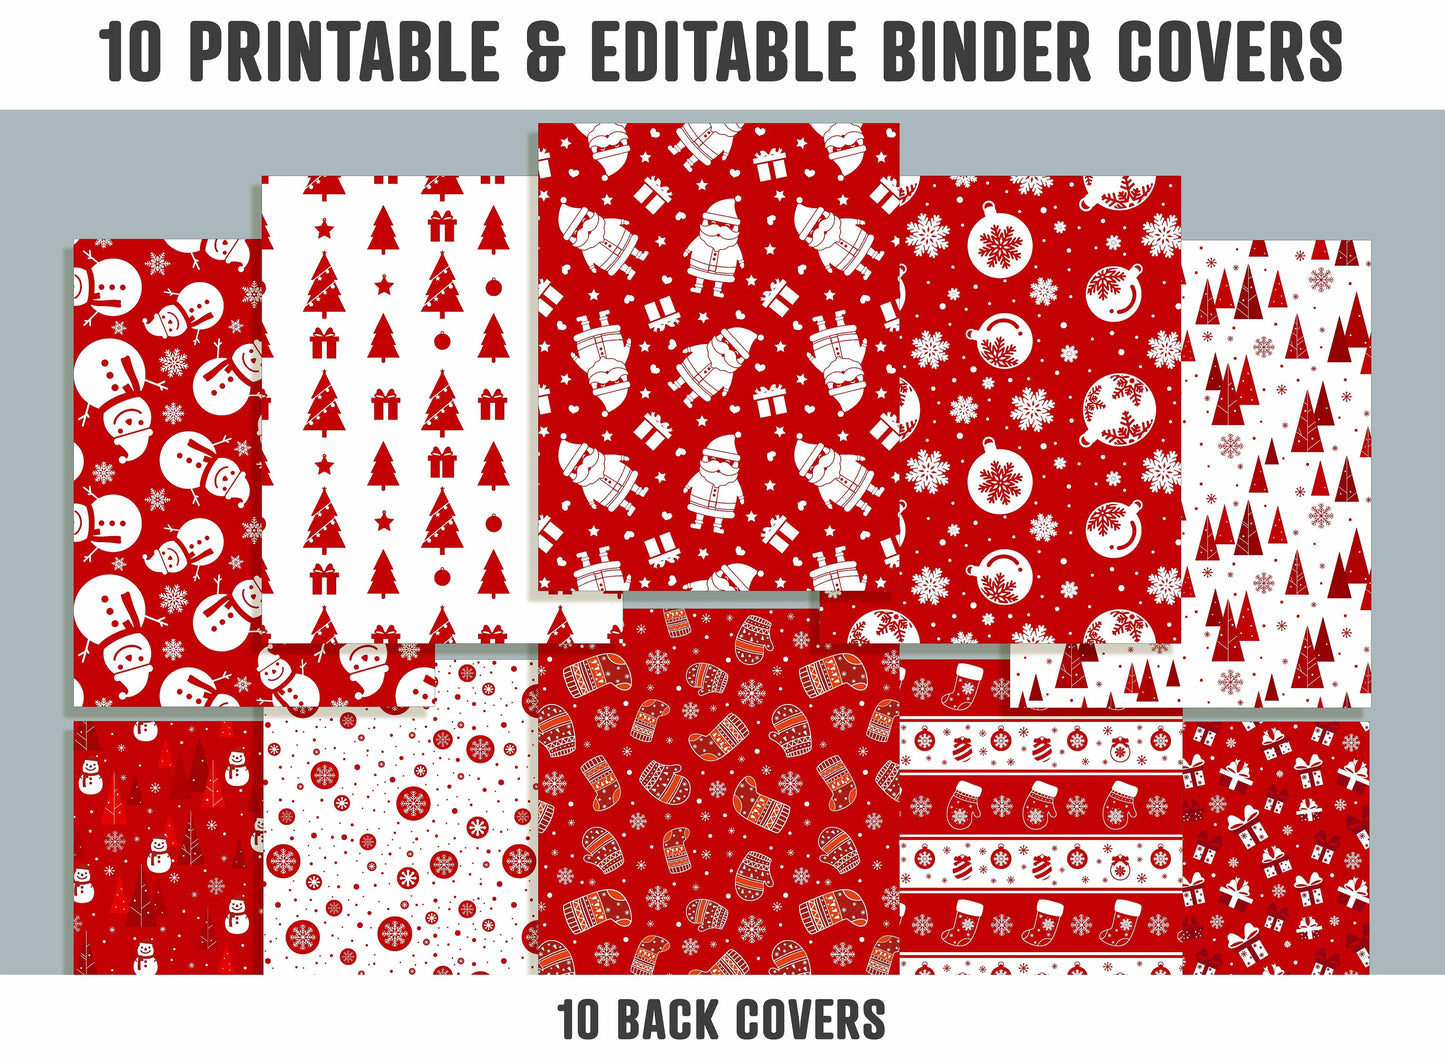 Merry Christmas Pattern Binder Cover, 10 Printable & Editable Binder Covers + Spines, Binder Inserts, Teacher/School Planner Template